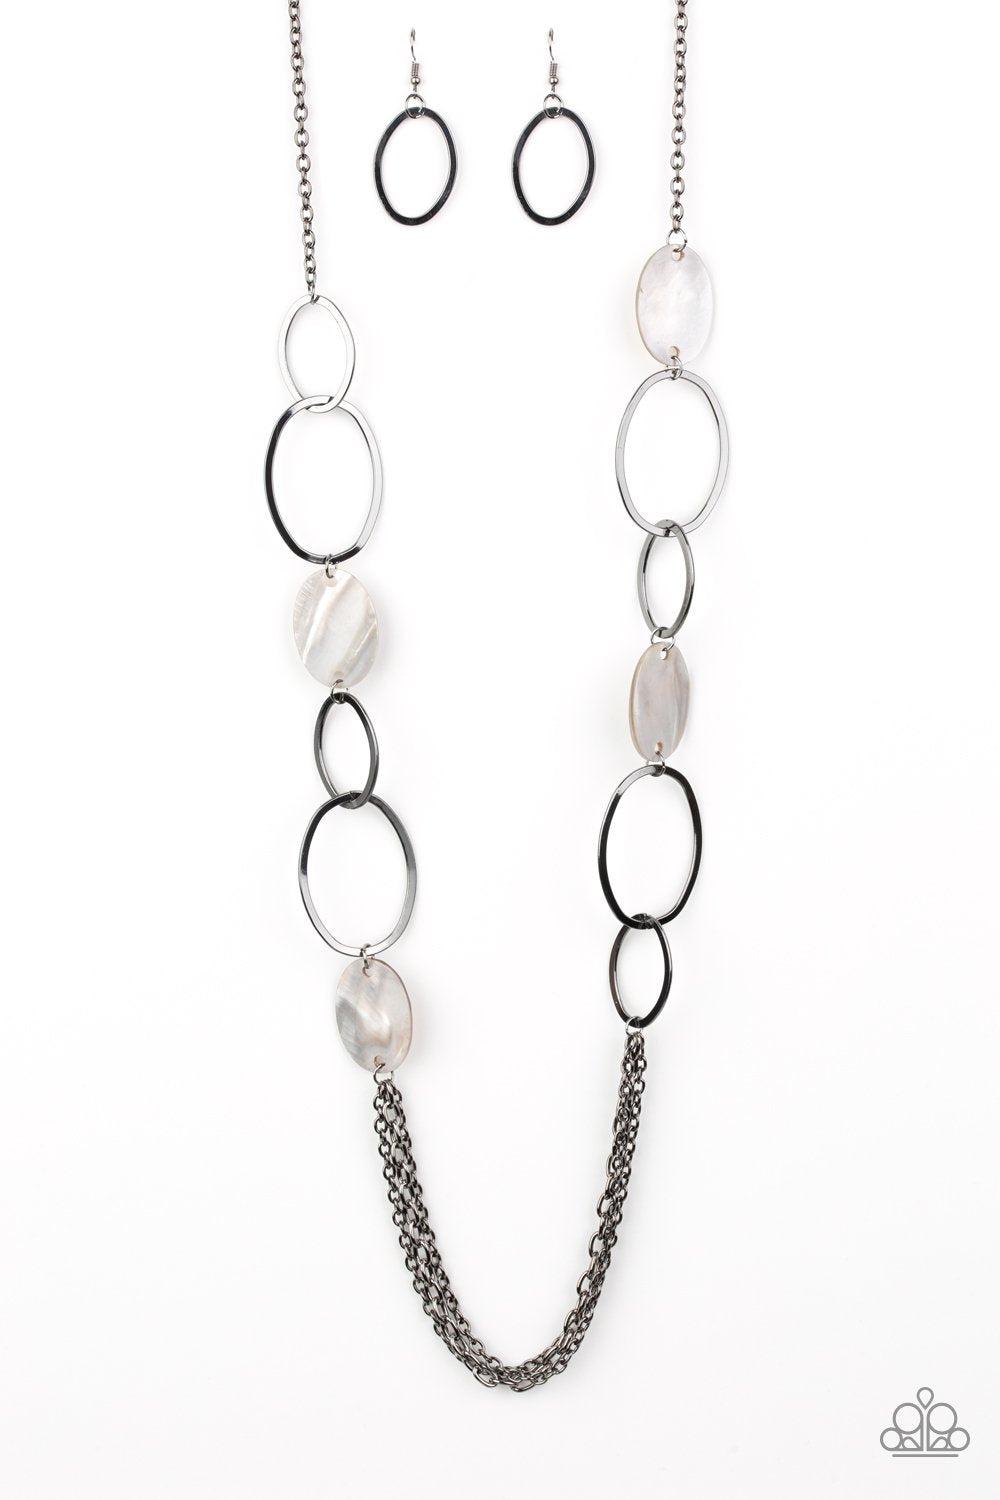 Kaleidoscope Coasts Black Necklace - Paparazzi Accessories - lightbox -CarasShop.com - $5 Jewelry by Cara Jewels